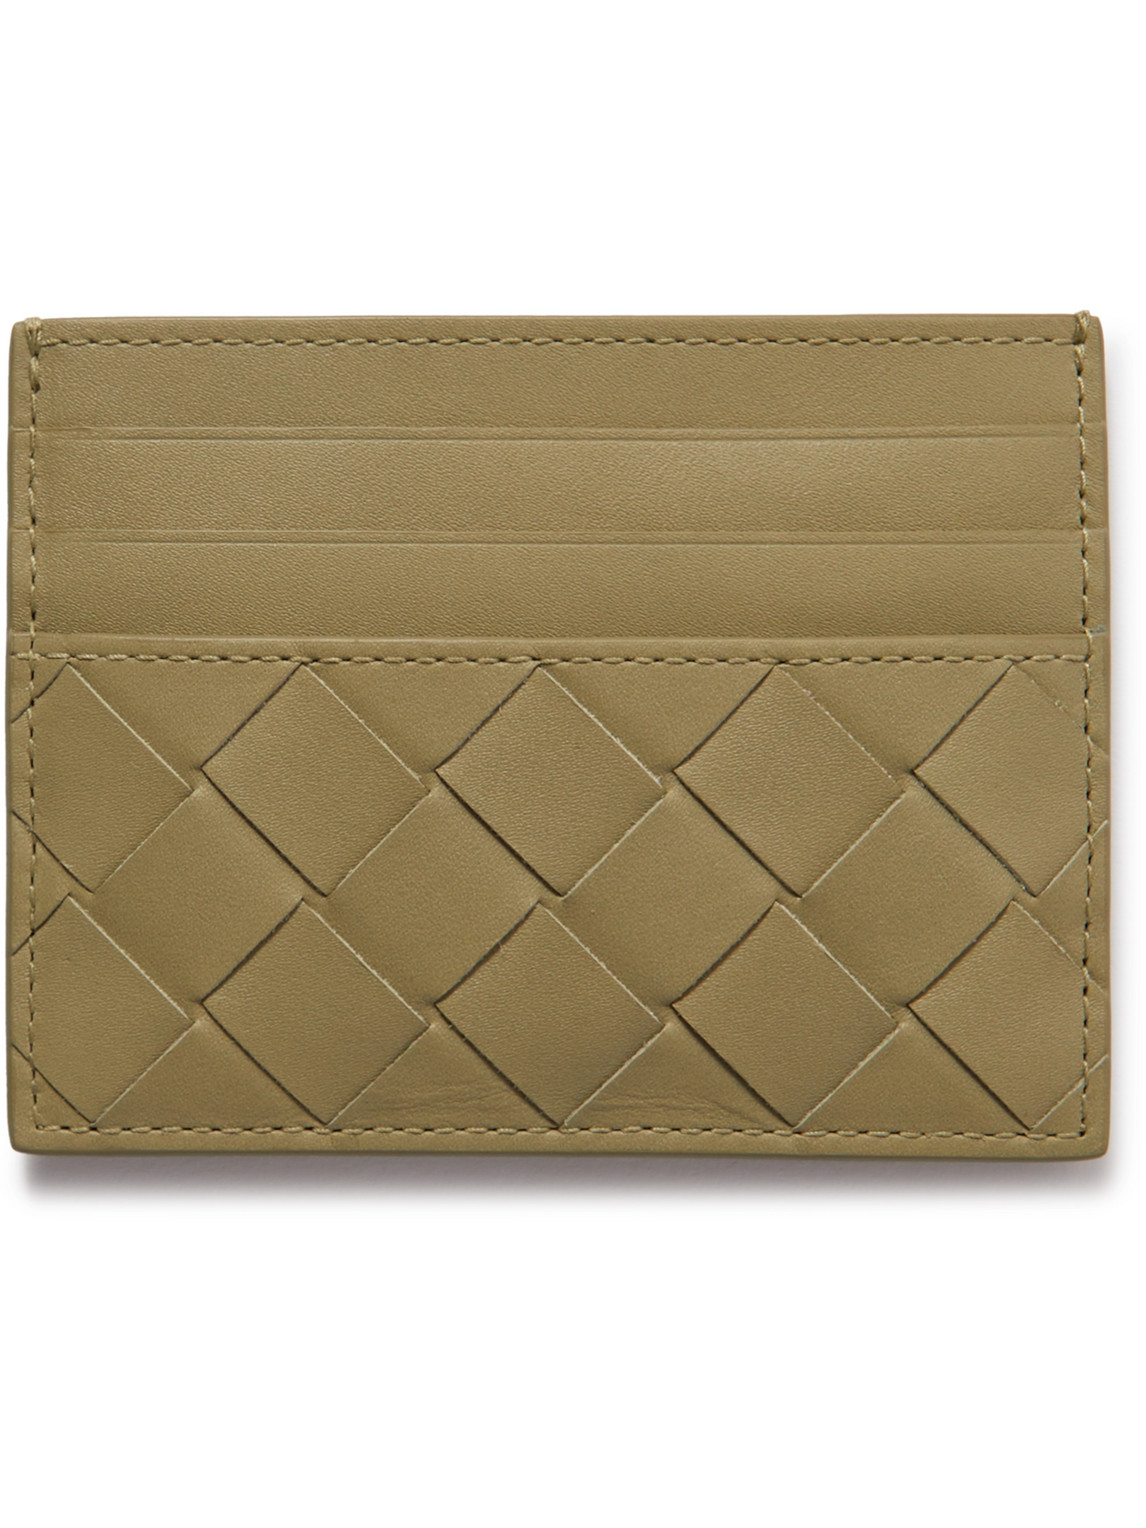 Bottega Veneta Intrecciato Leather Cardholder In Neutrals